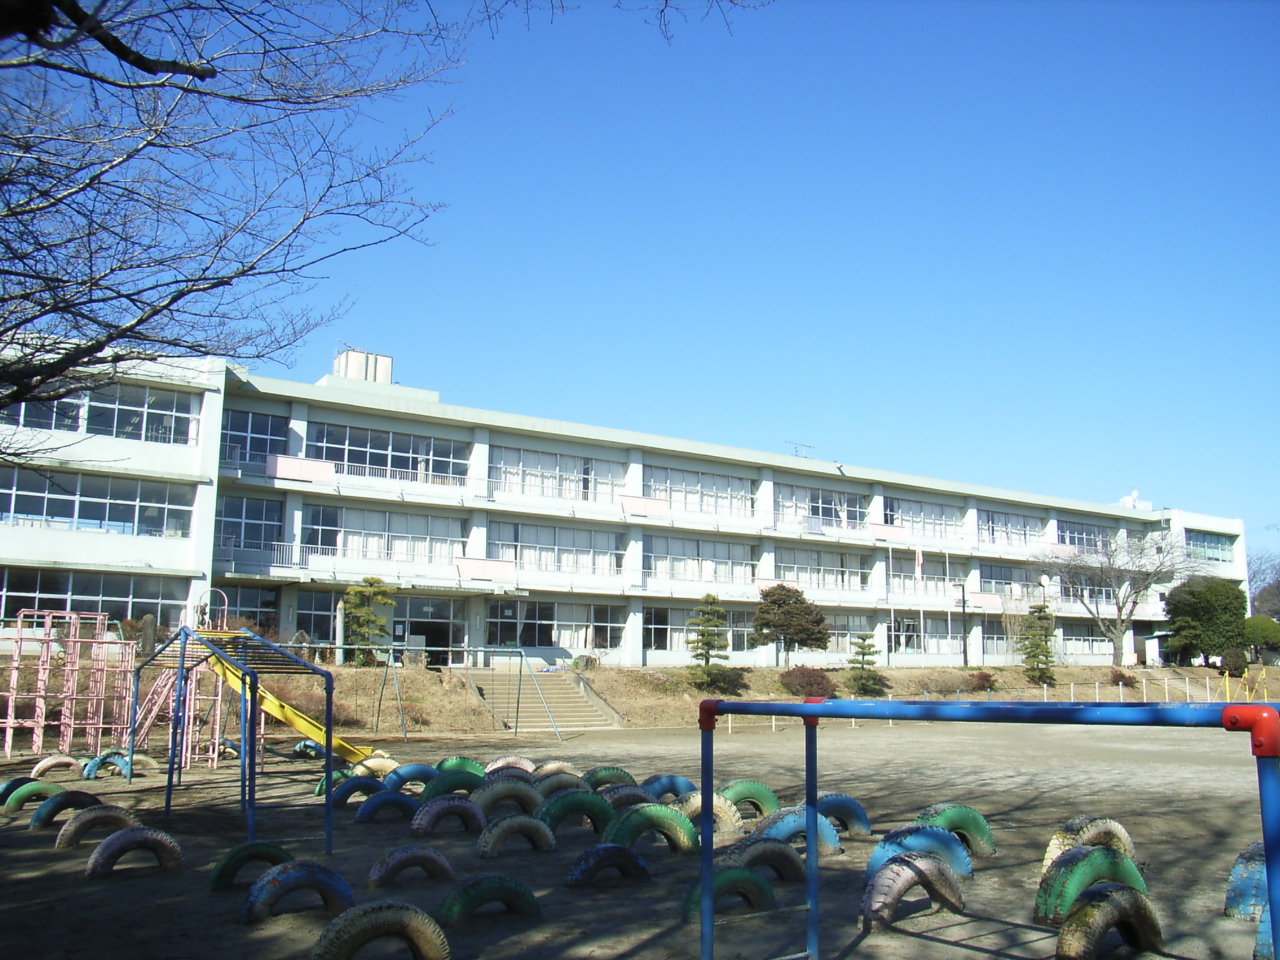 Primary school. 650m until the nephew ball Municipal Ogawa Elementary School (elementary school)